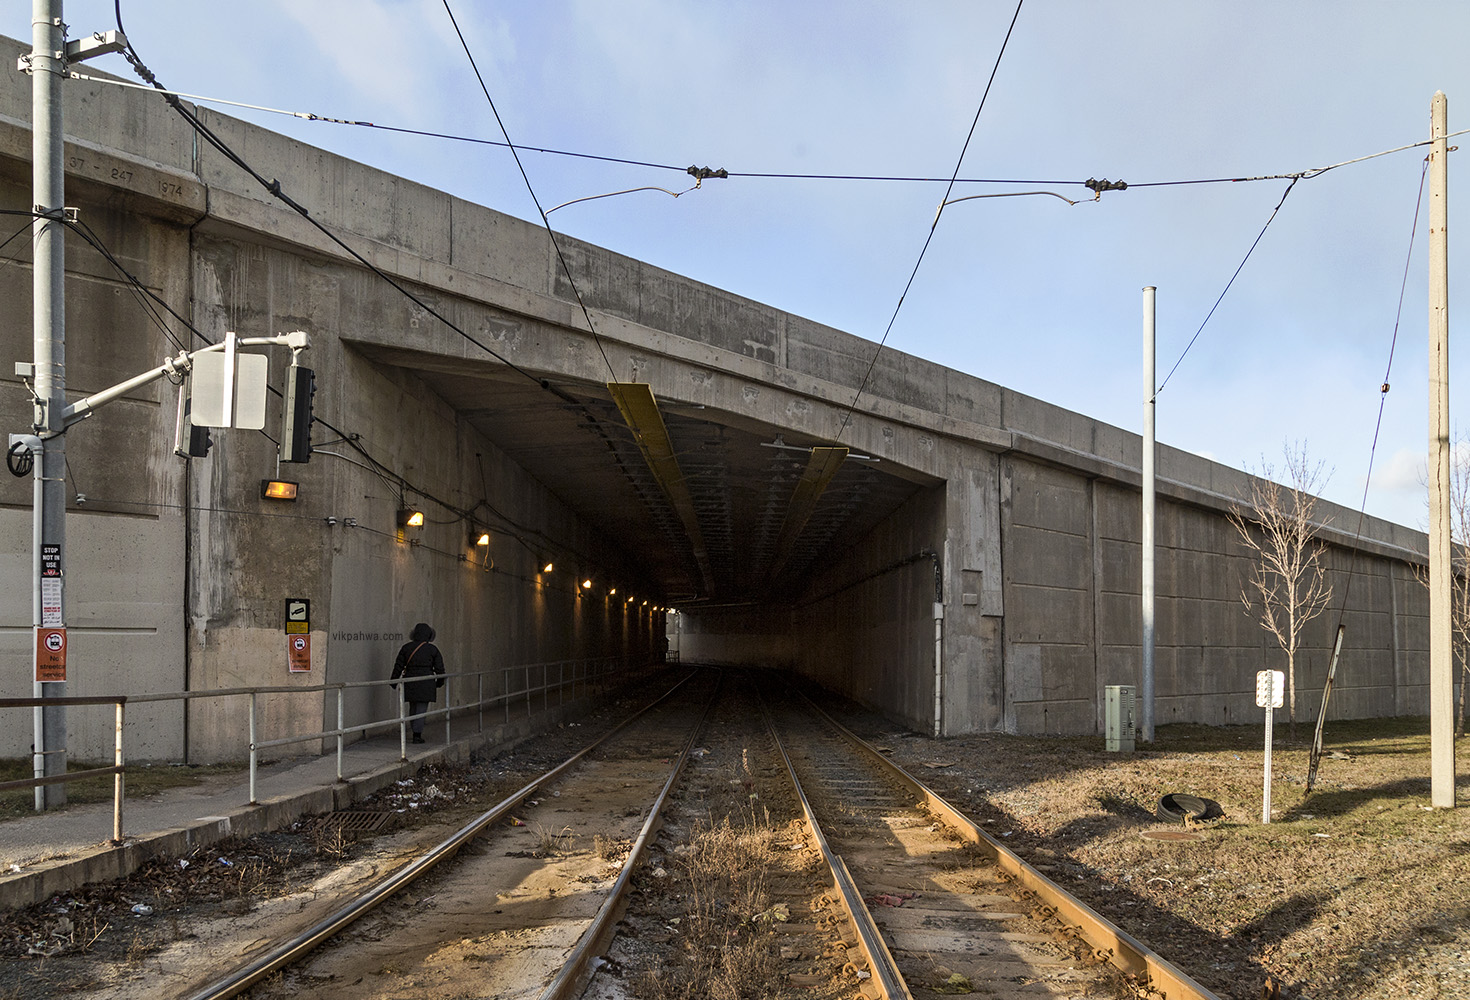 20170123. Entering TTC's Humber Loop tunnel under the Gardiner E